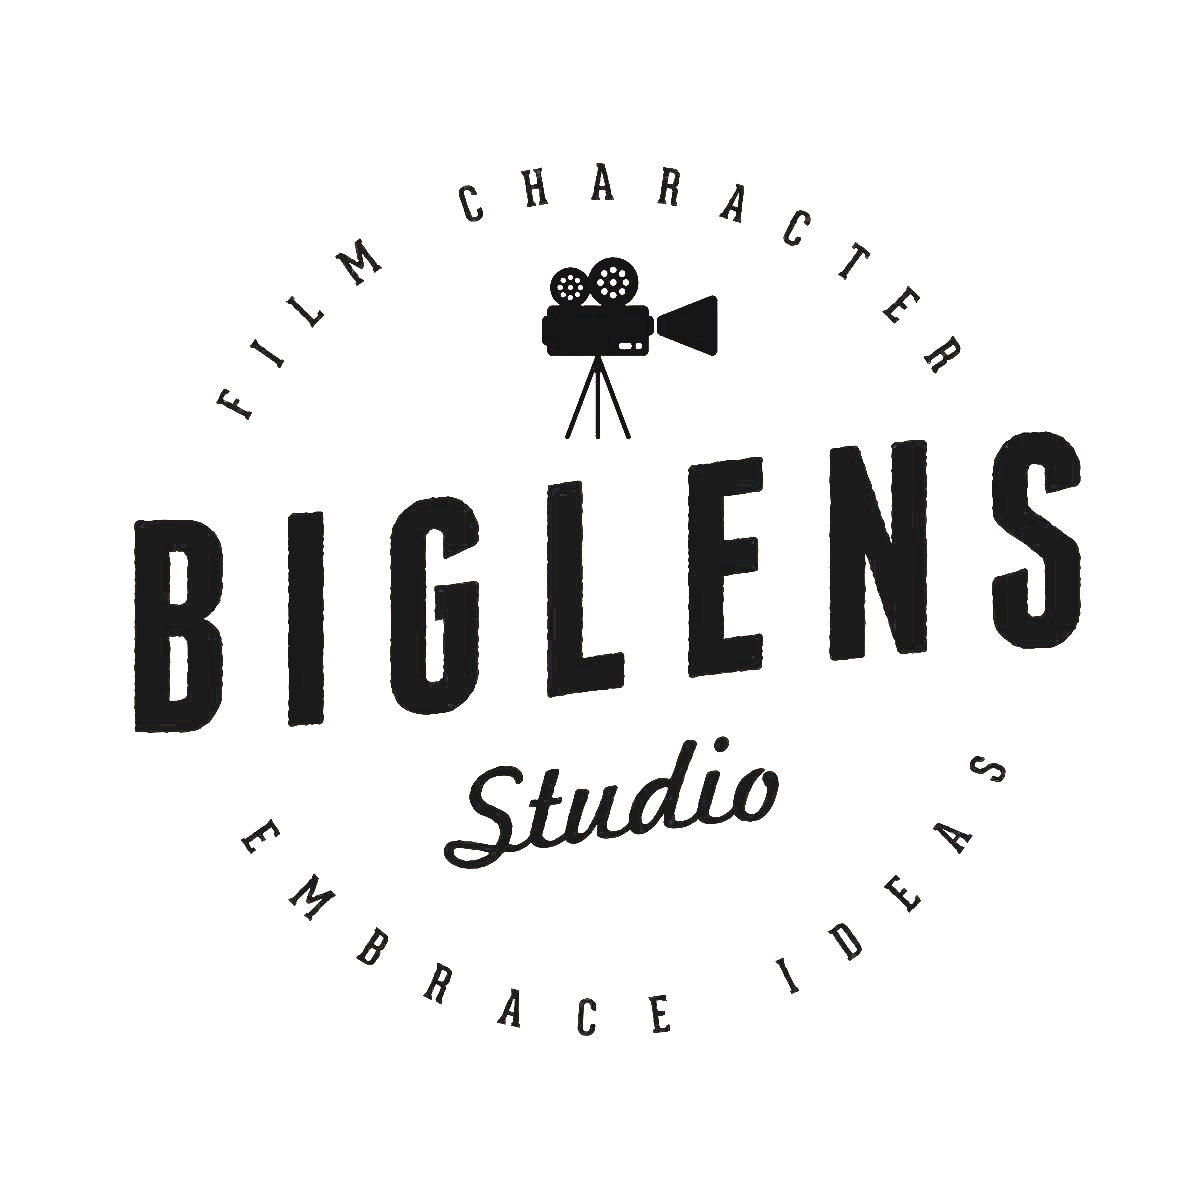 Biglens Studio